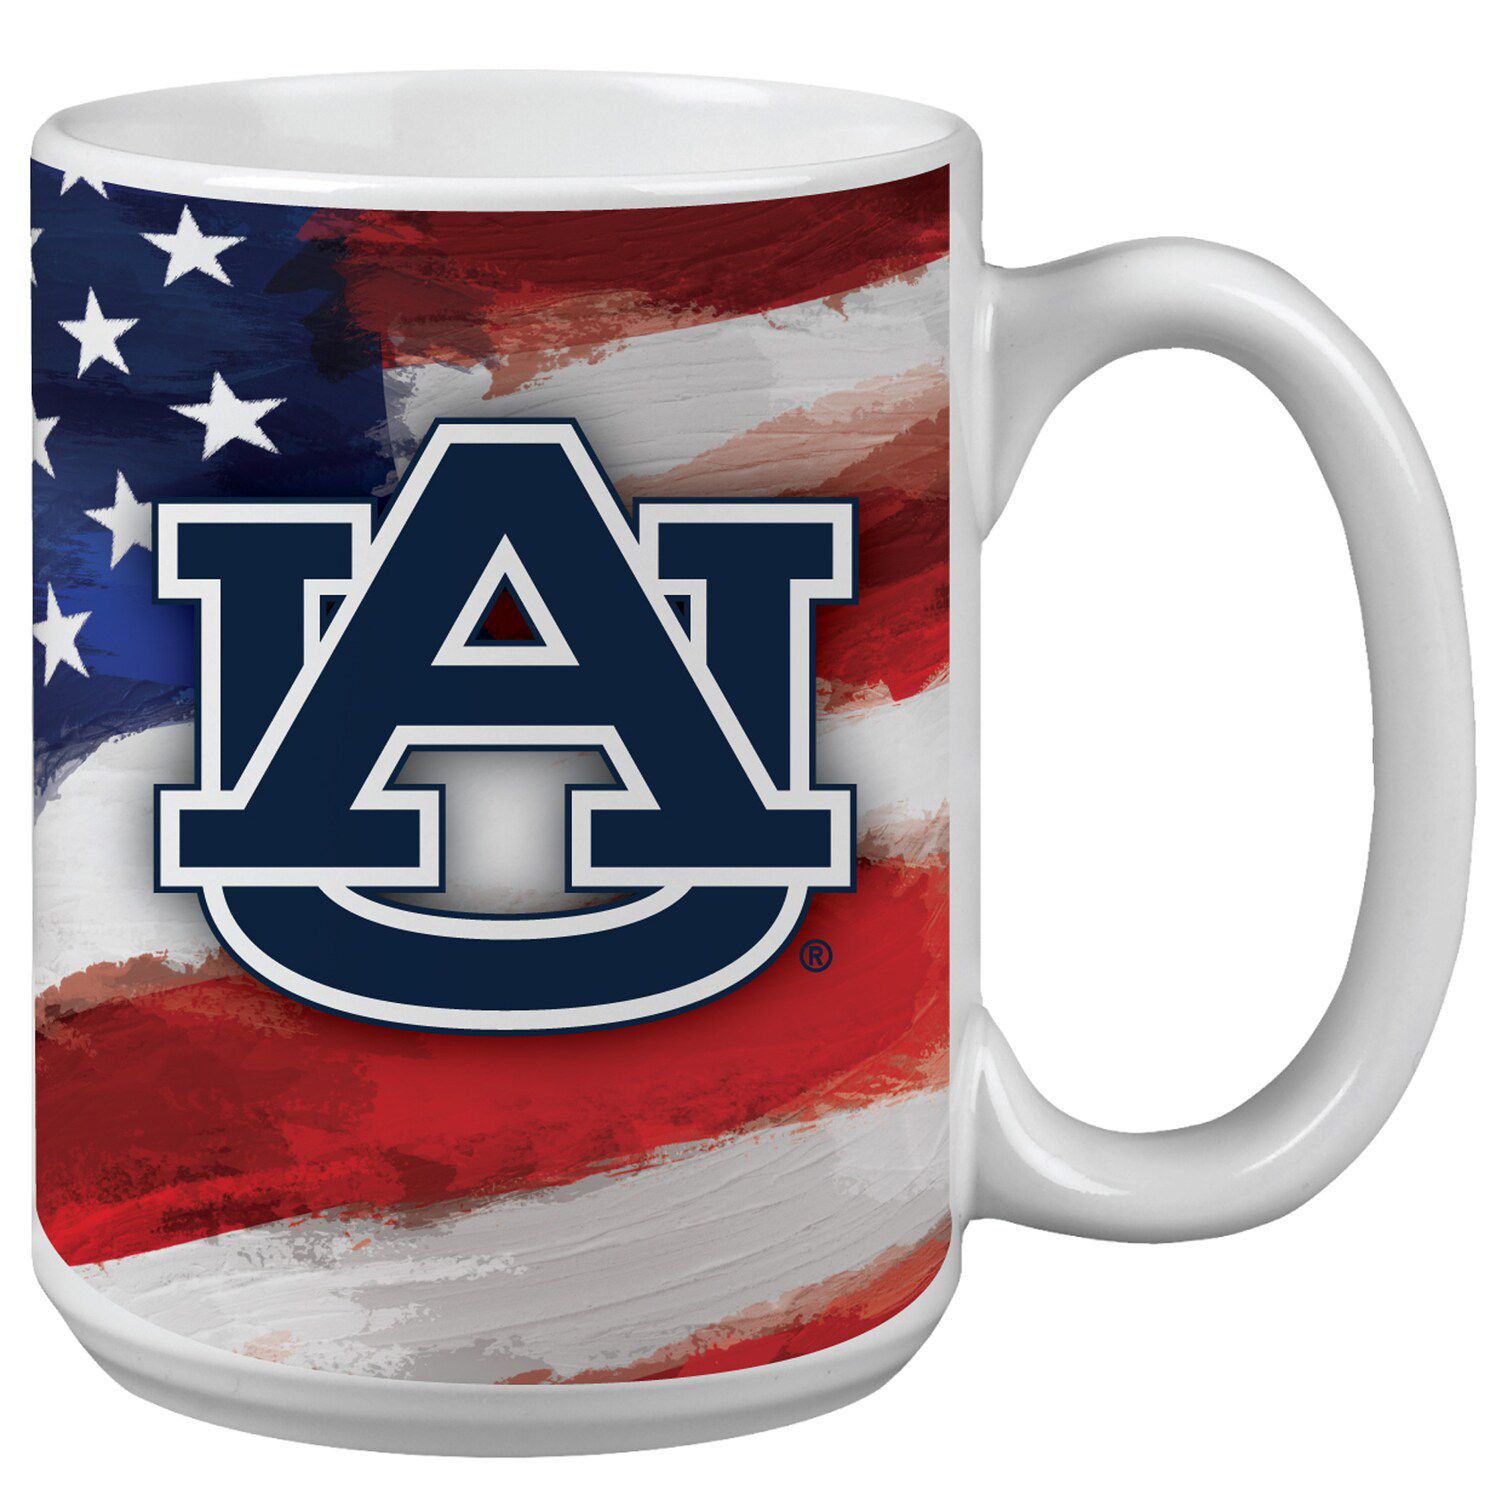 Image for Unbranded Auburn Tigers 15oz. Americana Java Mug at Kohl's.